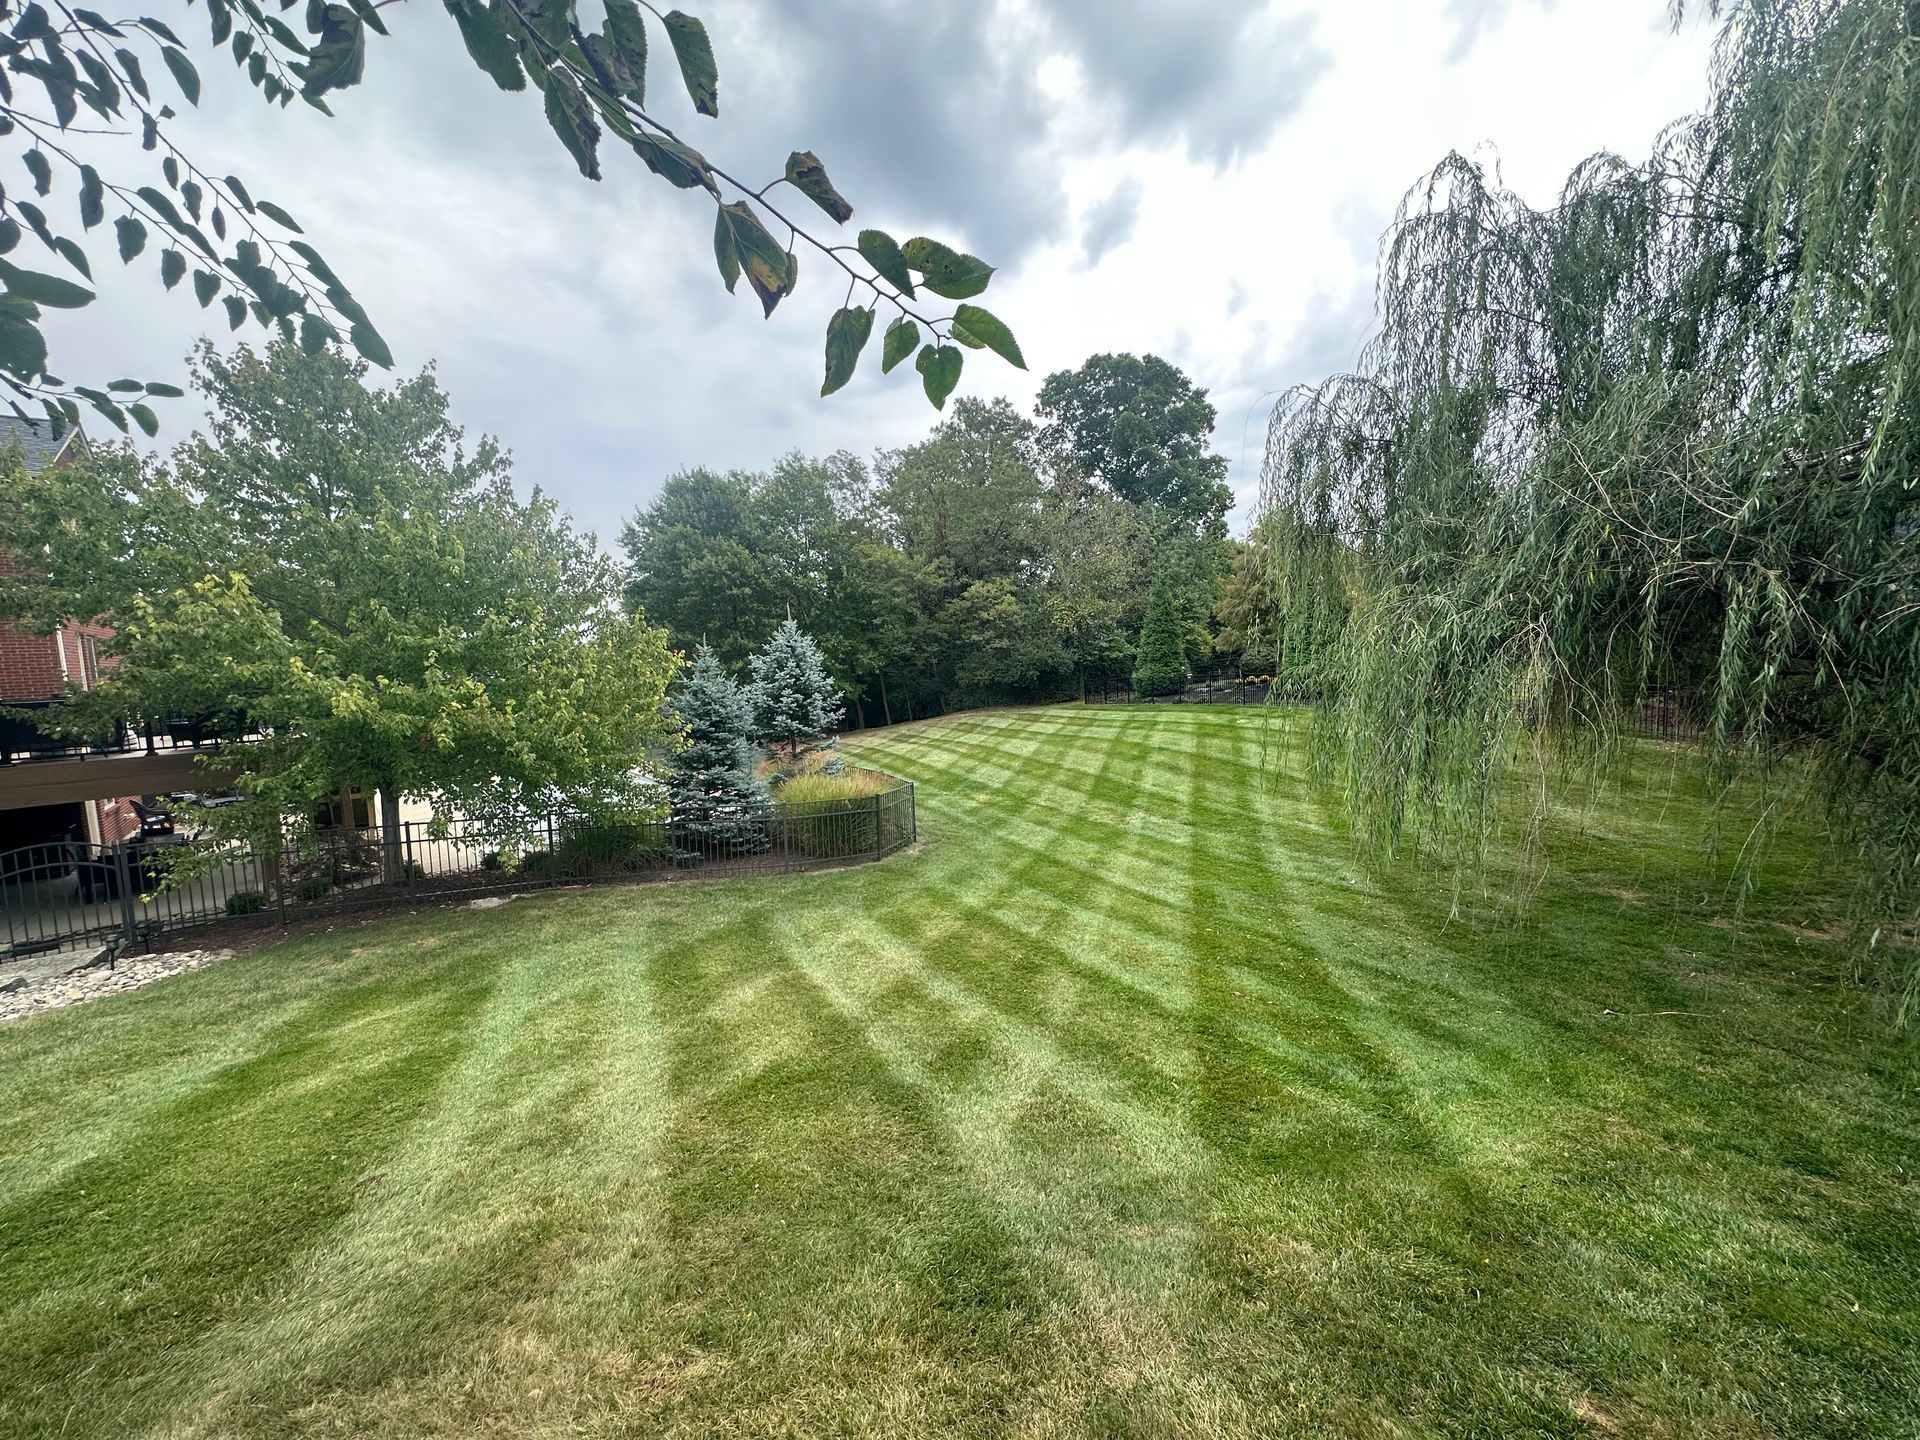 prime cut lawn